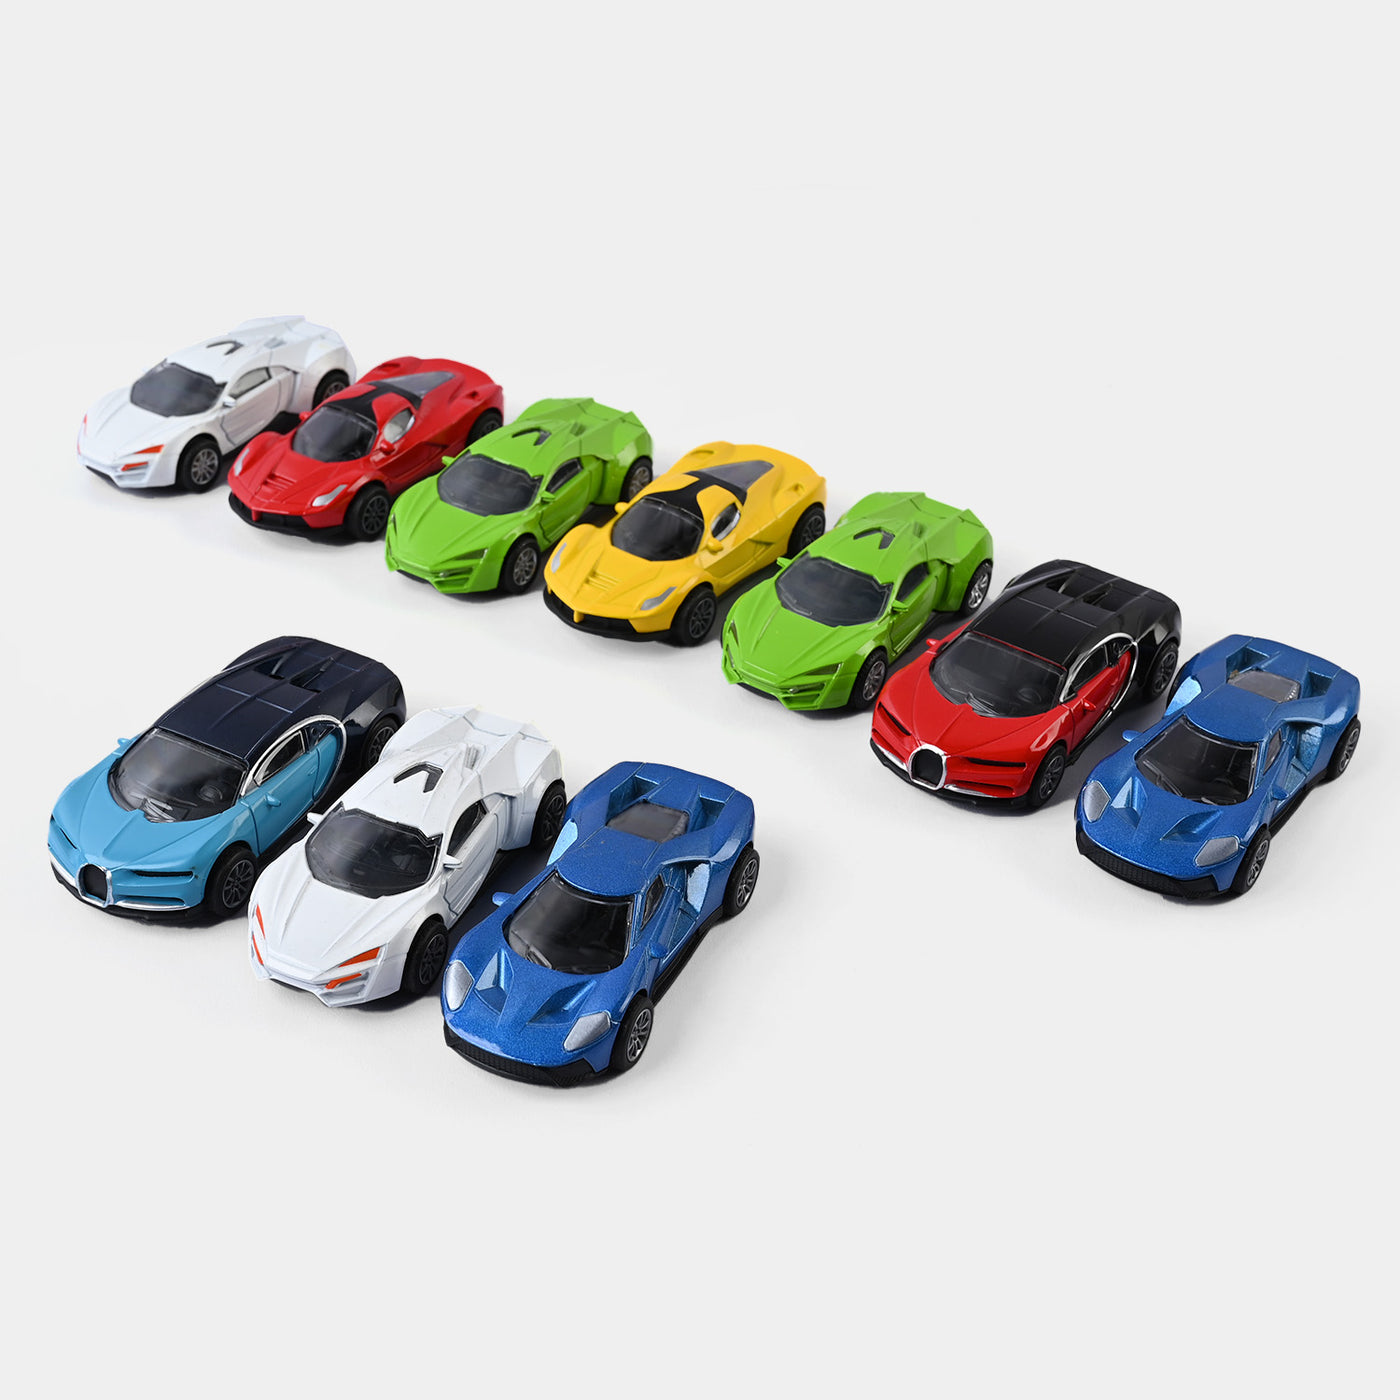 Car Set Toy For kids - 10Pcs